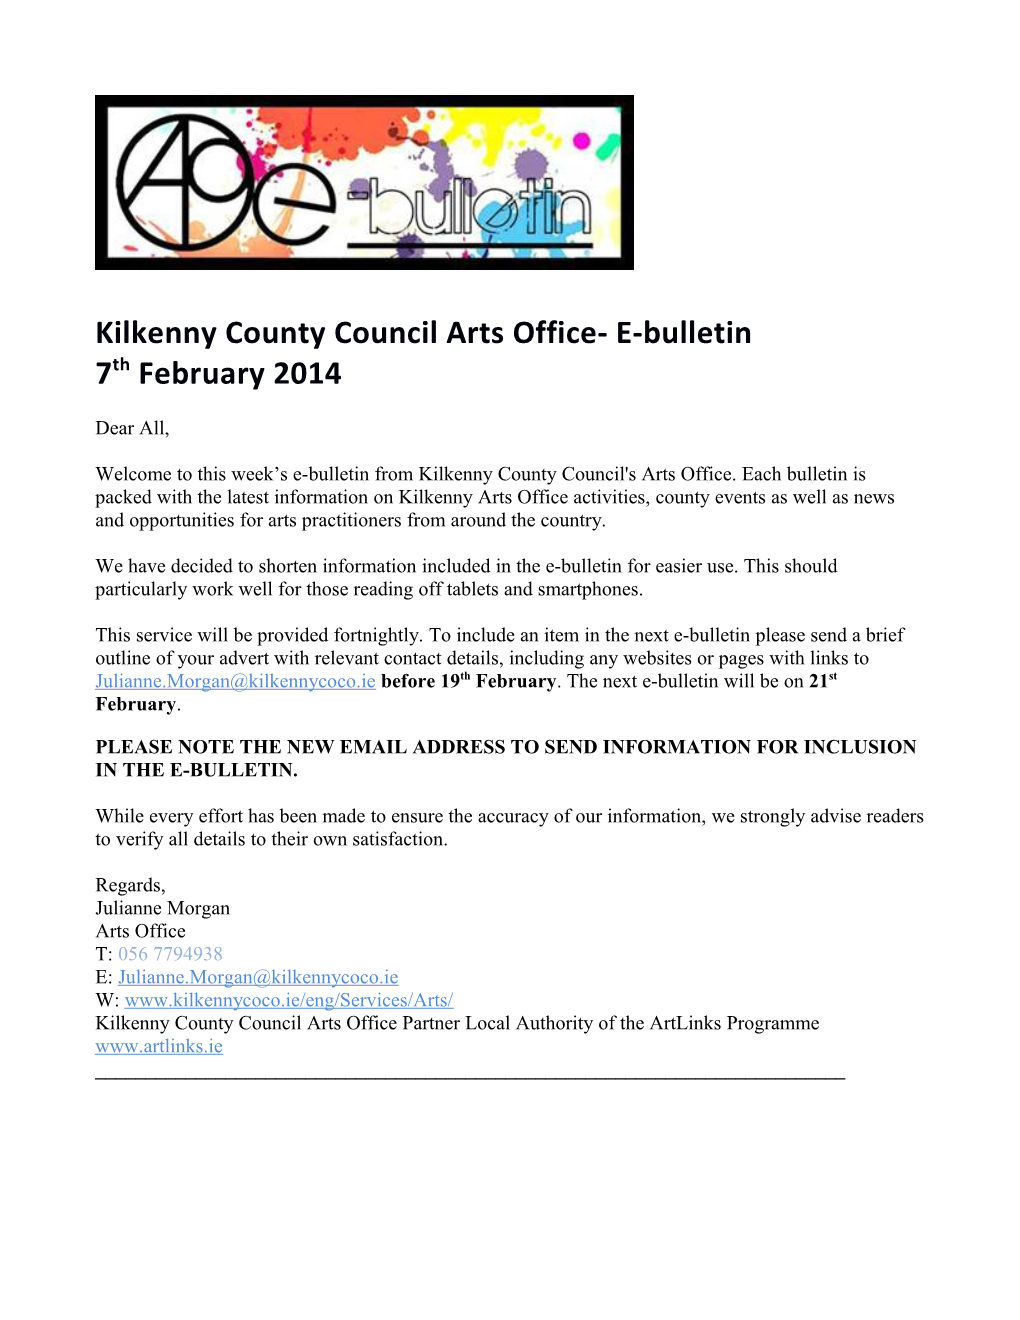 Kilkenny County Council Arts Office- E-Bulletin